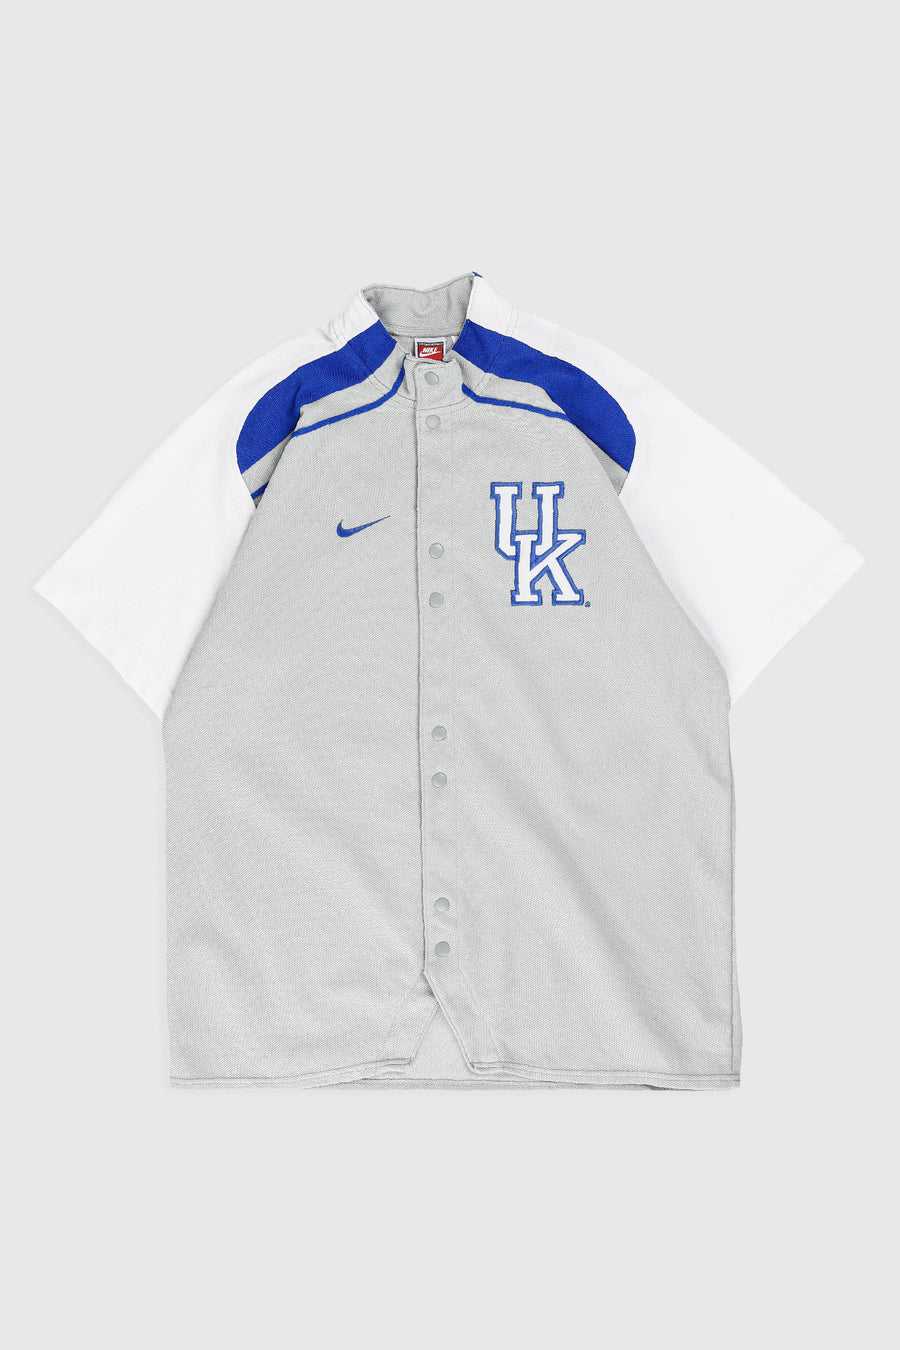 Vintage Nike Kentucky Tearaway Shirt - L